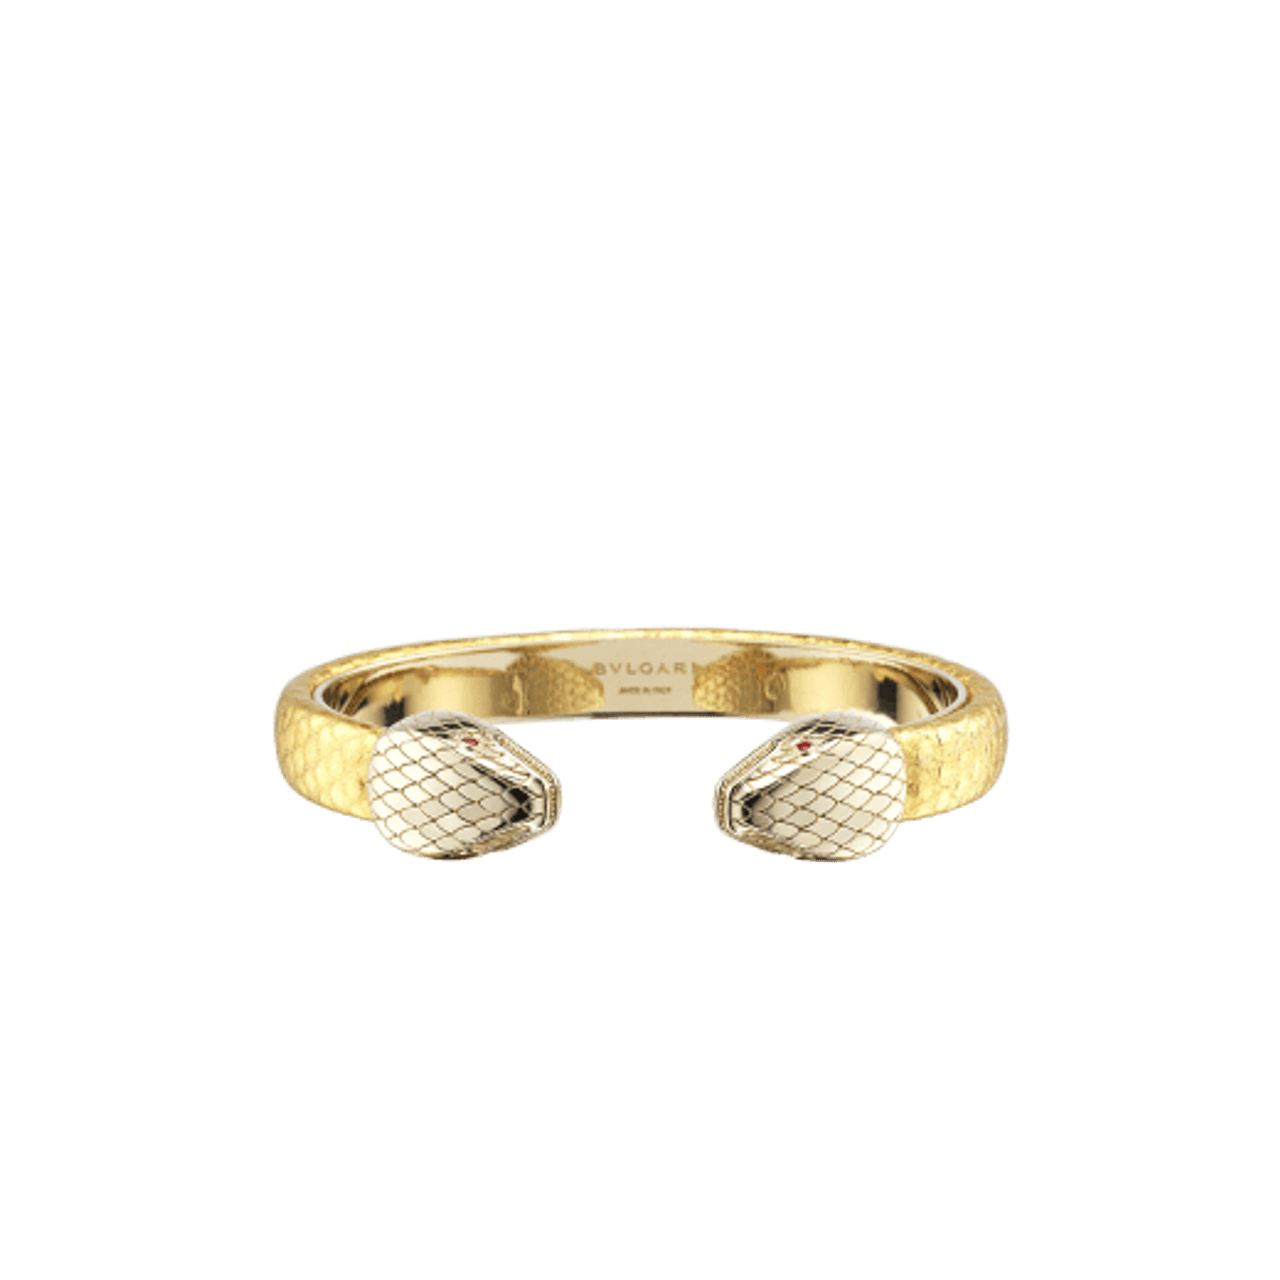 BVLGARI 287840 Serpenti Forever Bracelet String Accessory Black Silver  color | eBay